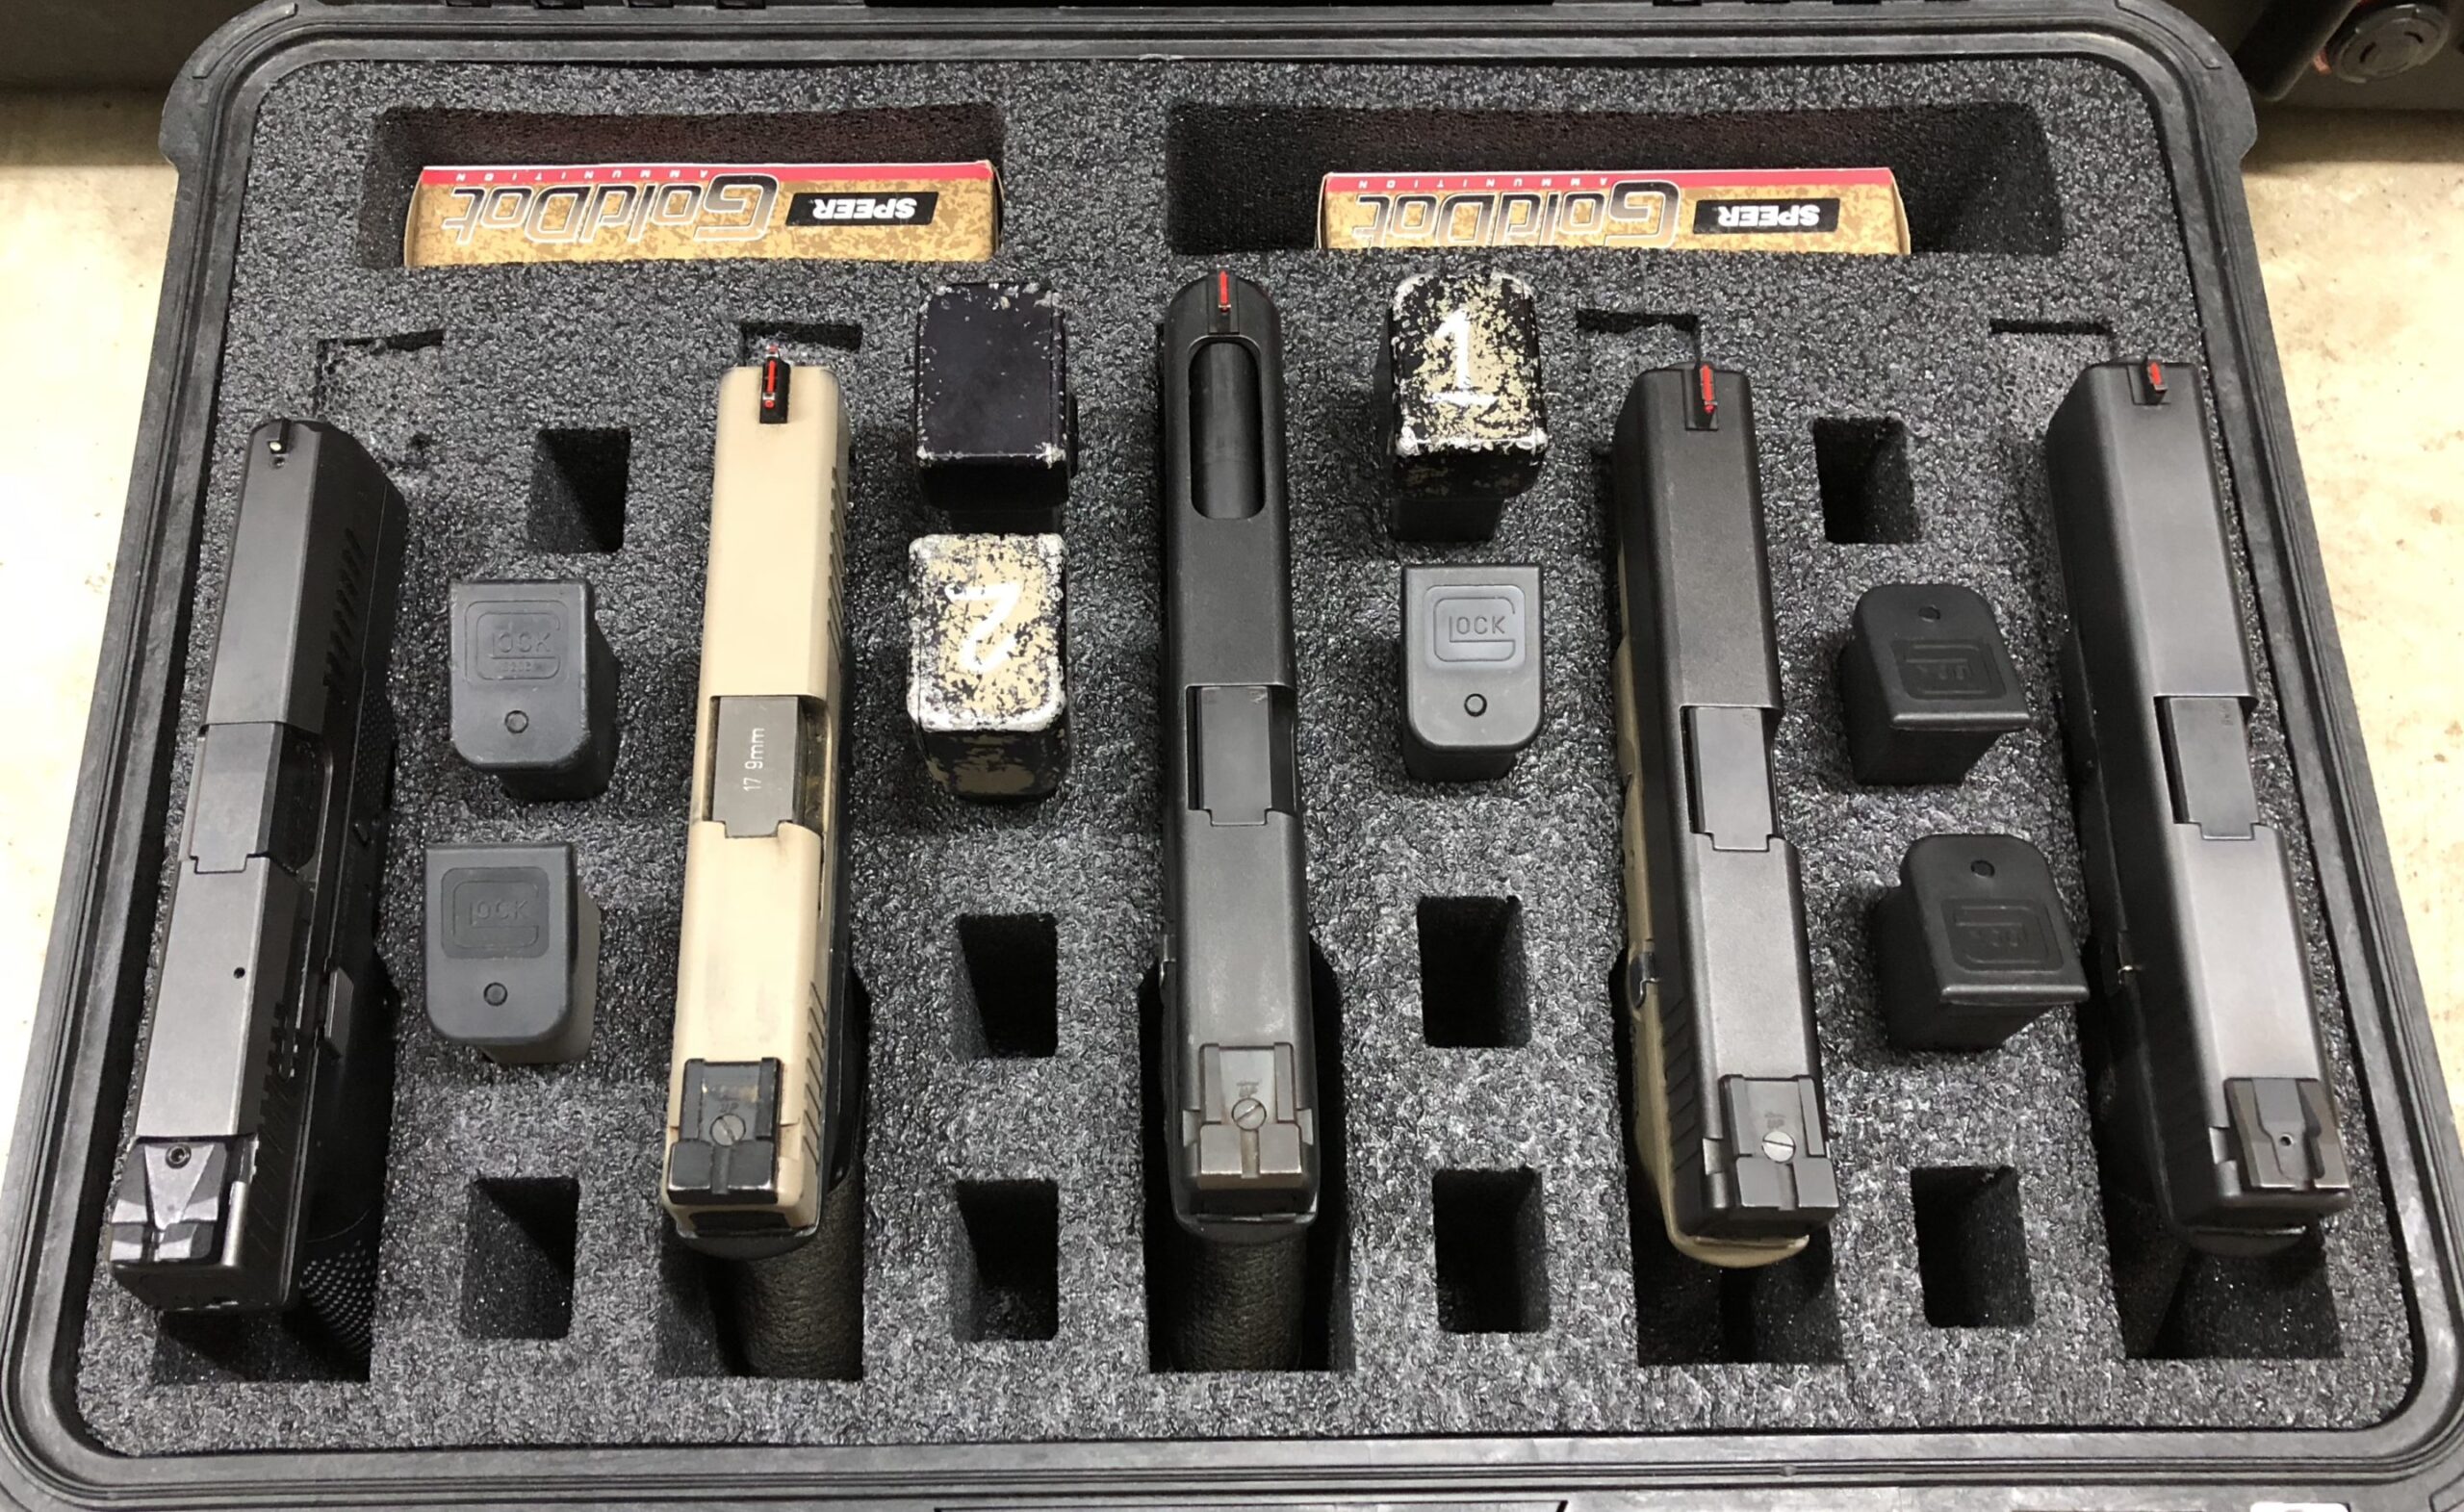 New 4 pistol Quick Draw handgun foam insert fits Harbor Freight Apache 4800  case